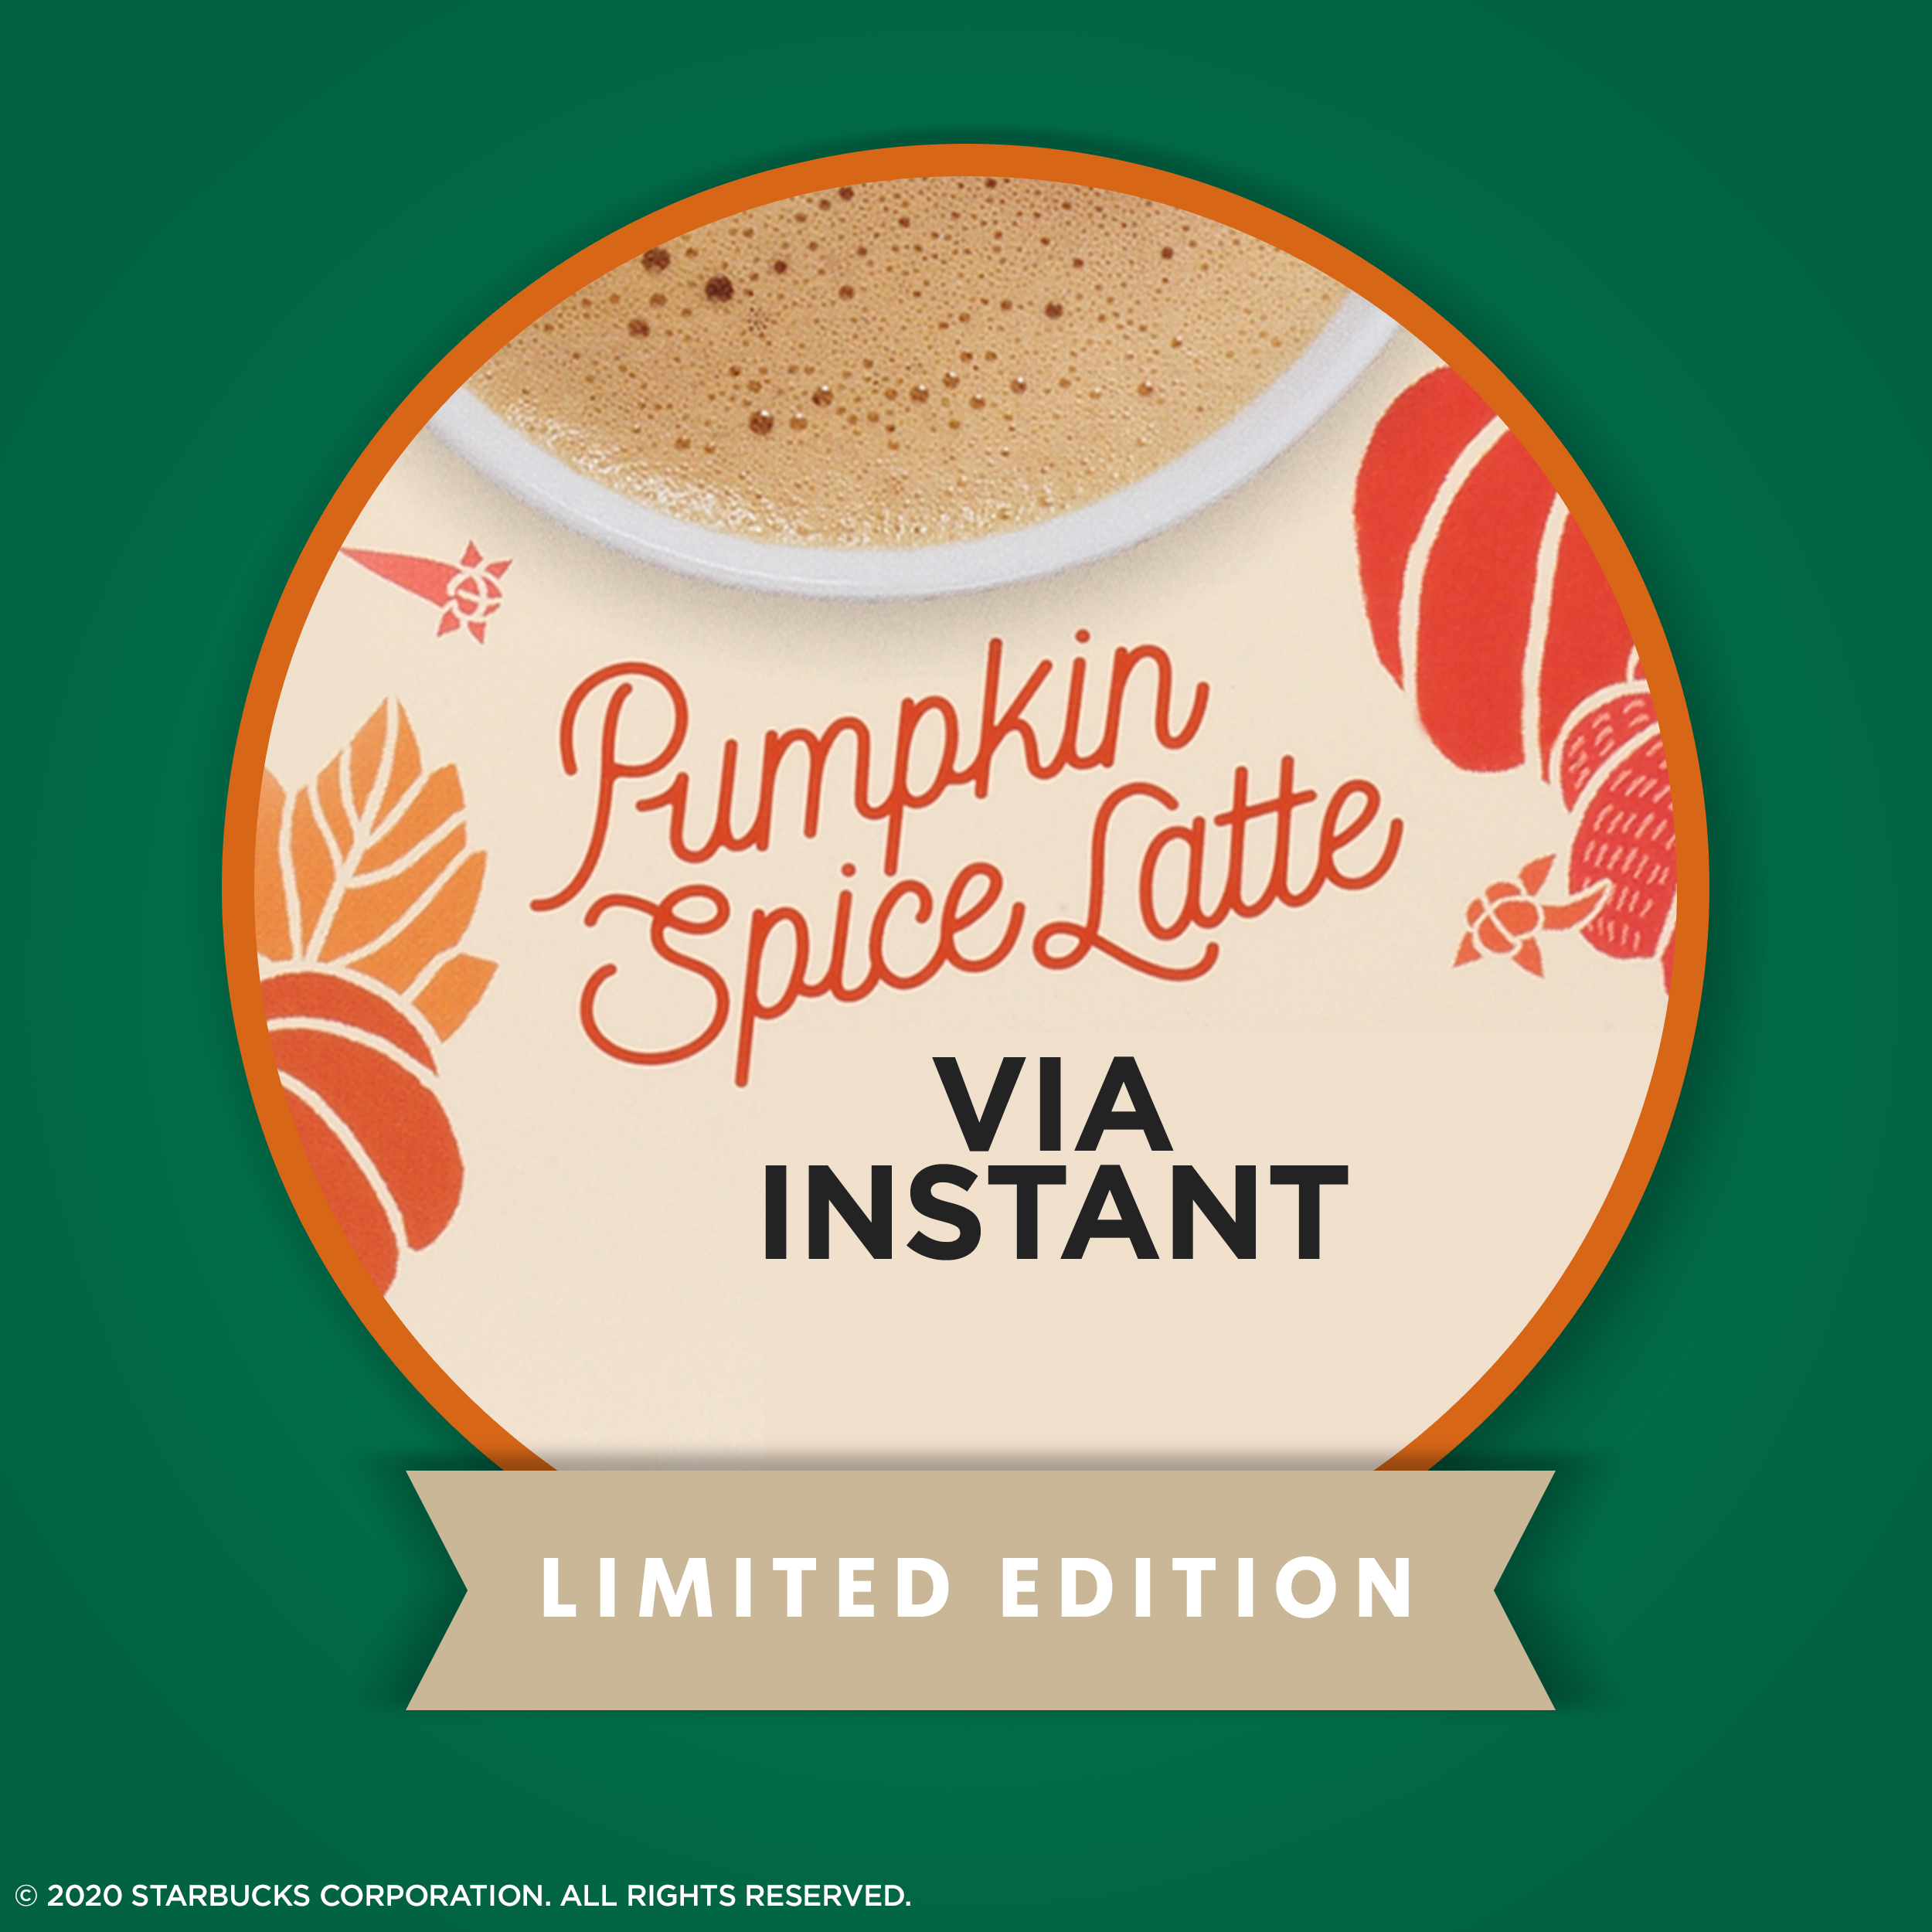 Starbucks Pumpkin Spice Latte Via - image 3 of 6